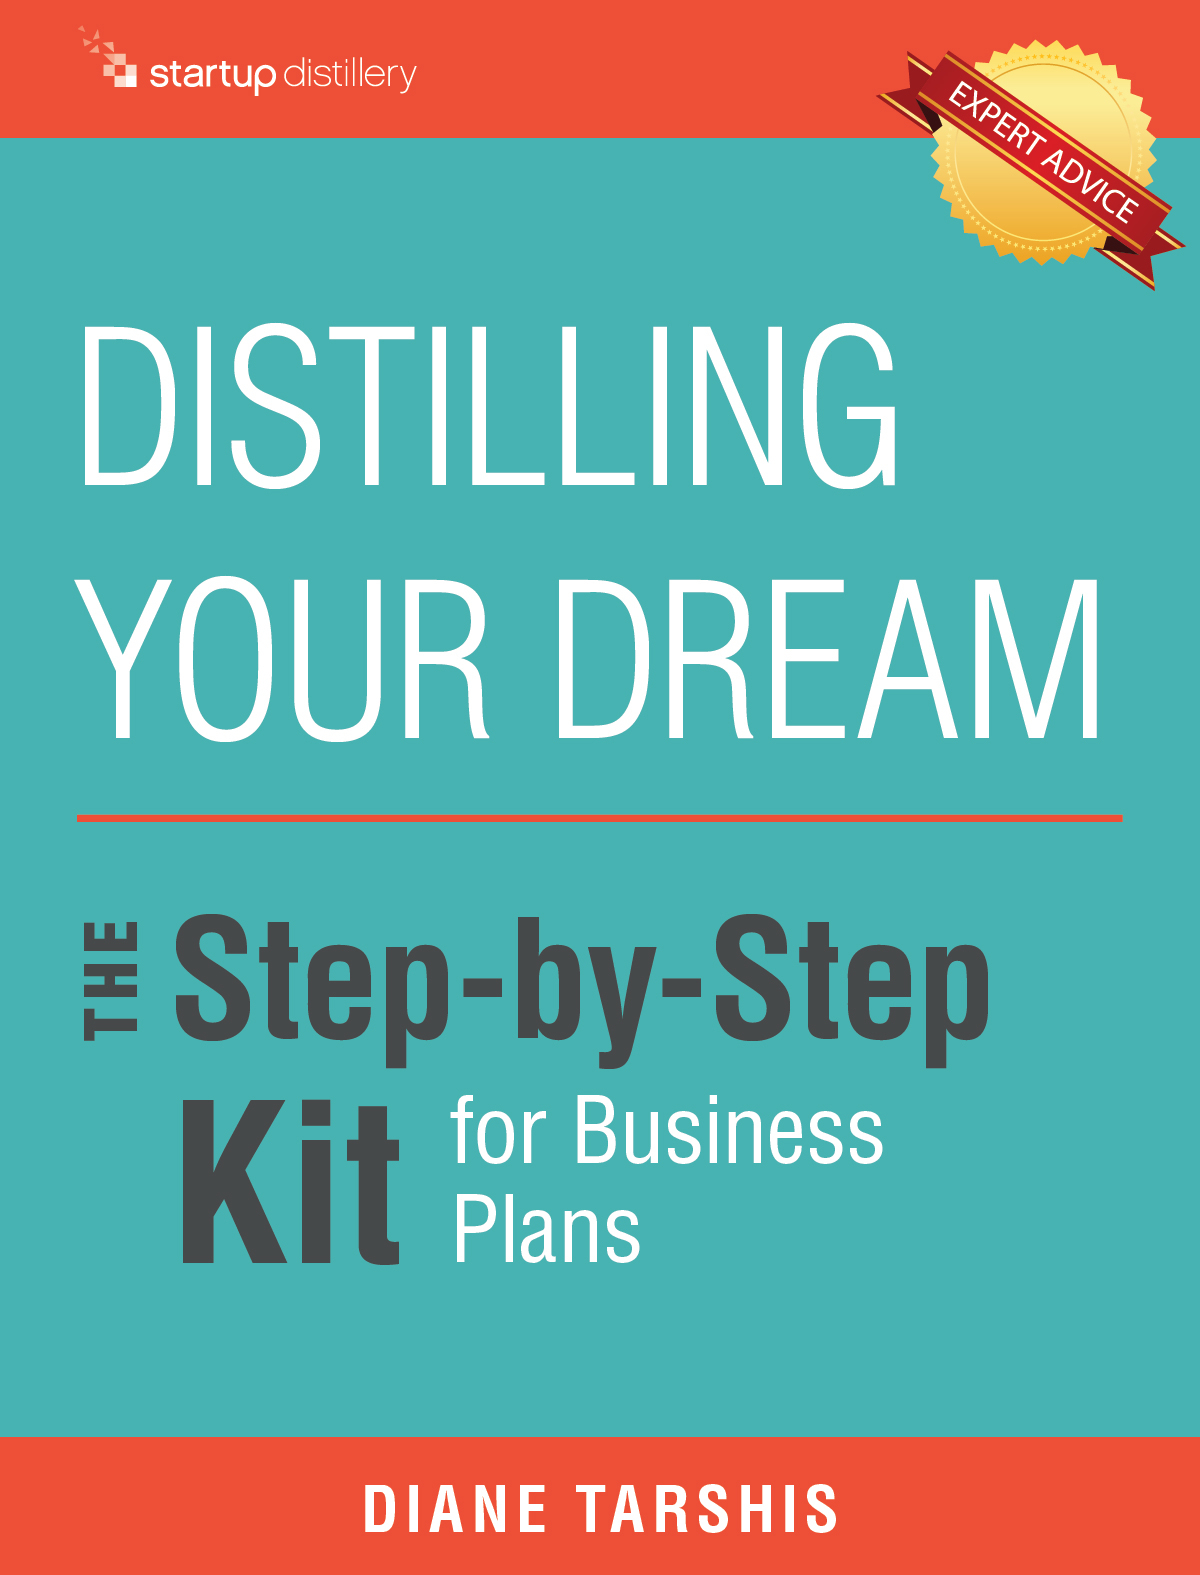 Startup Distillery Spreadsheets intended for Diy Stepbystep Business Plan Kit  Startup Distillery